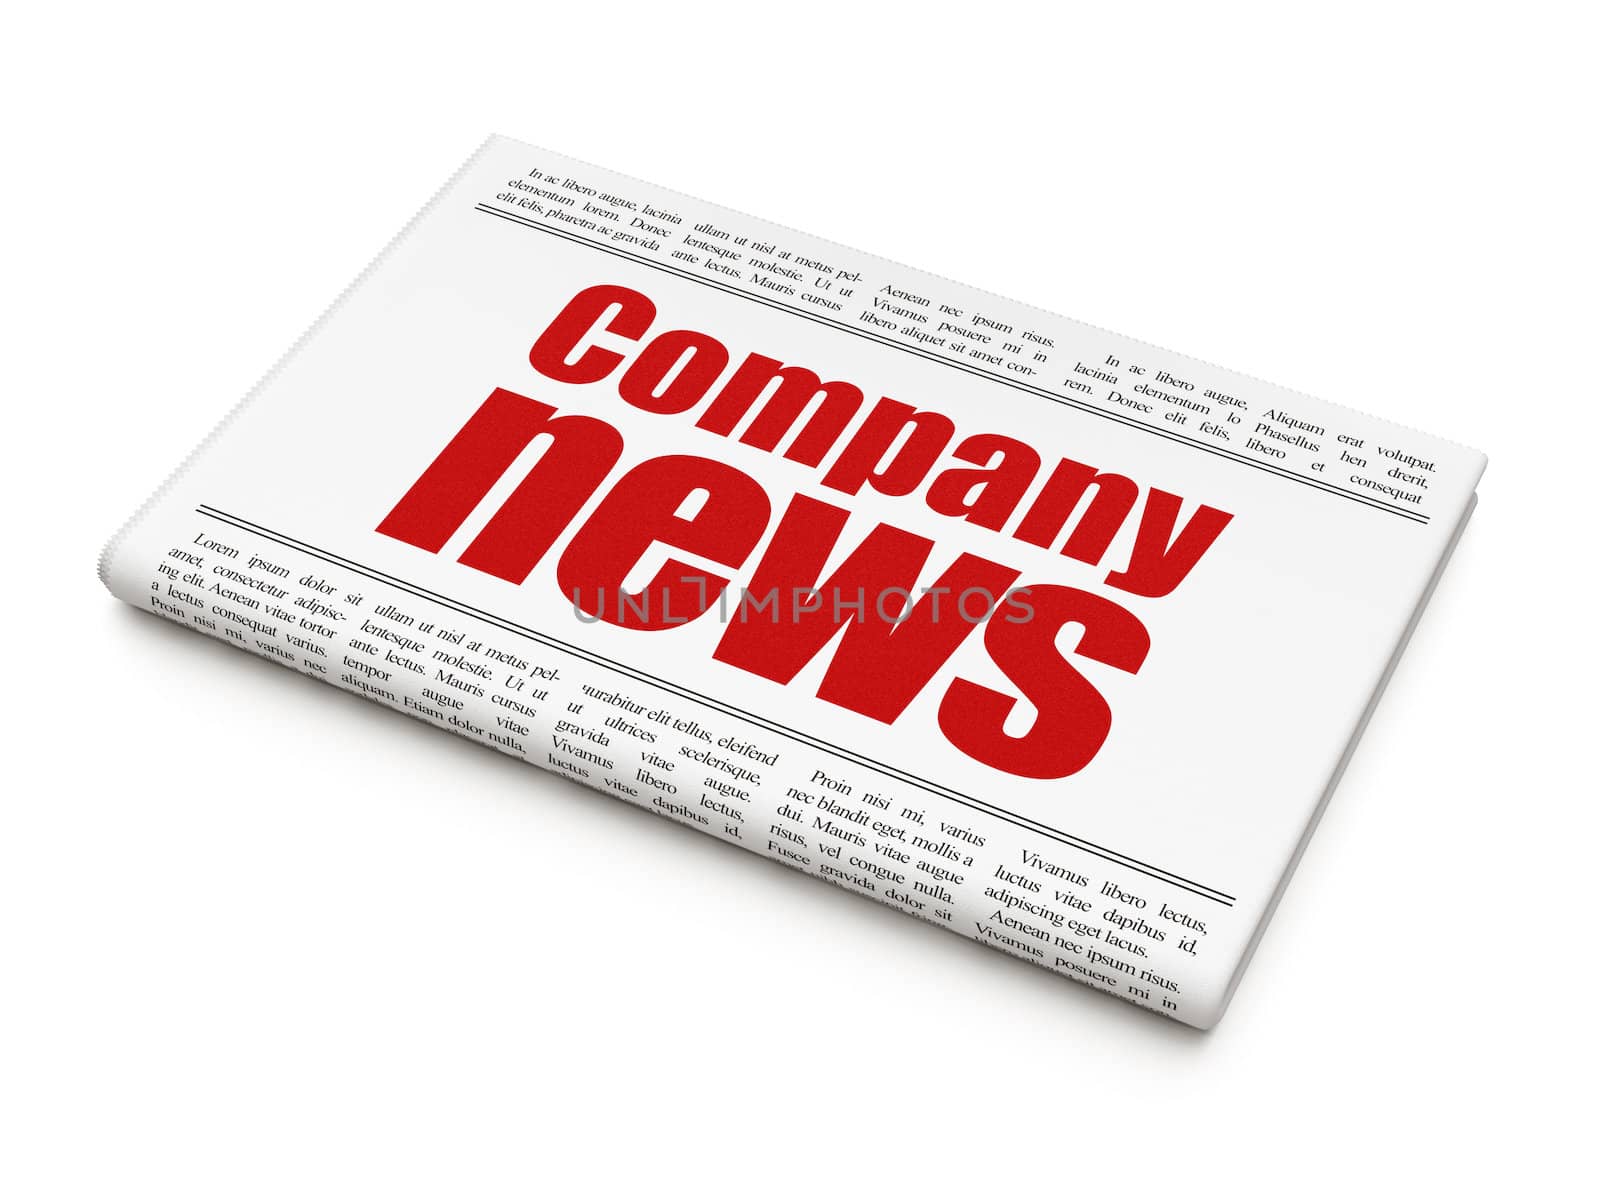 News news concept: newspaper headline Company News on White background, 3d render